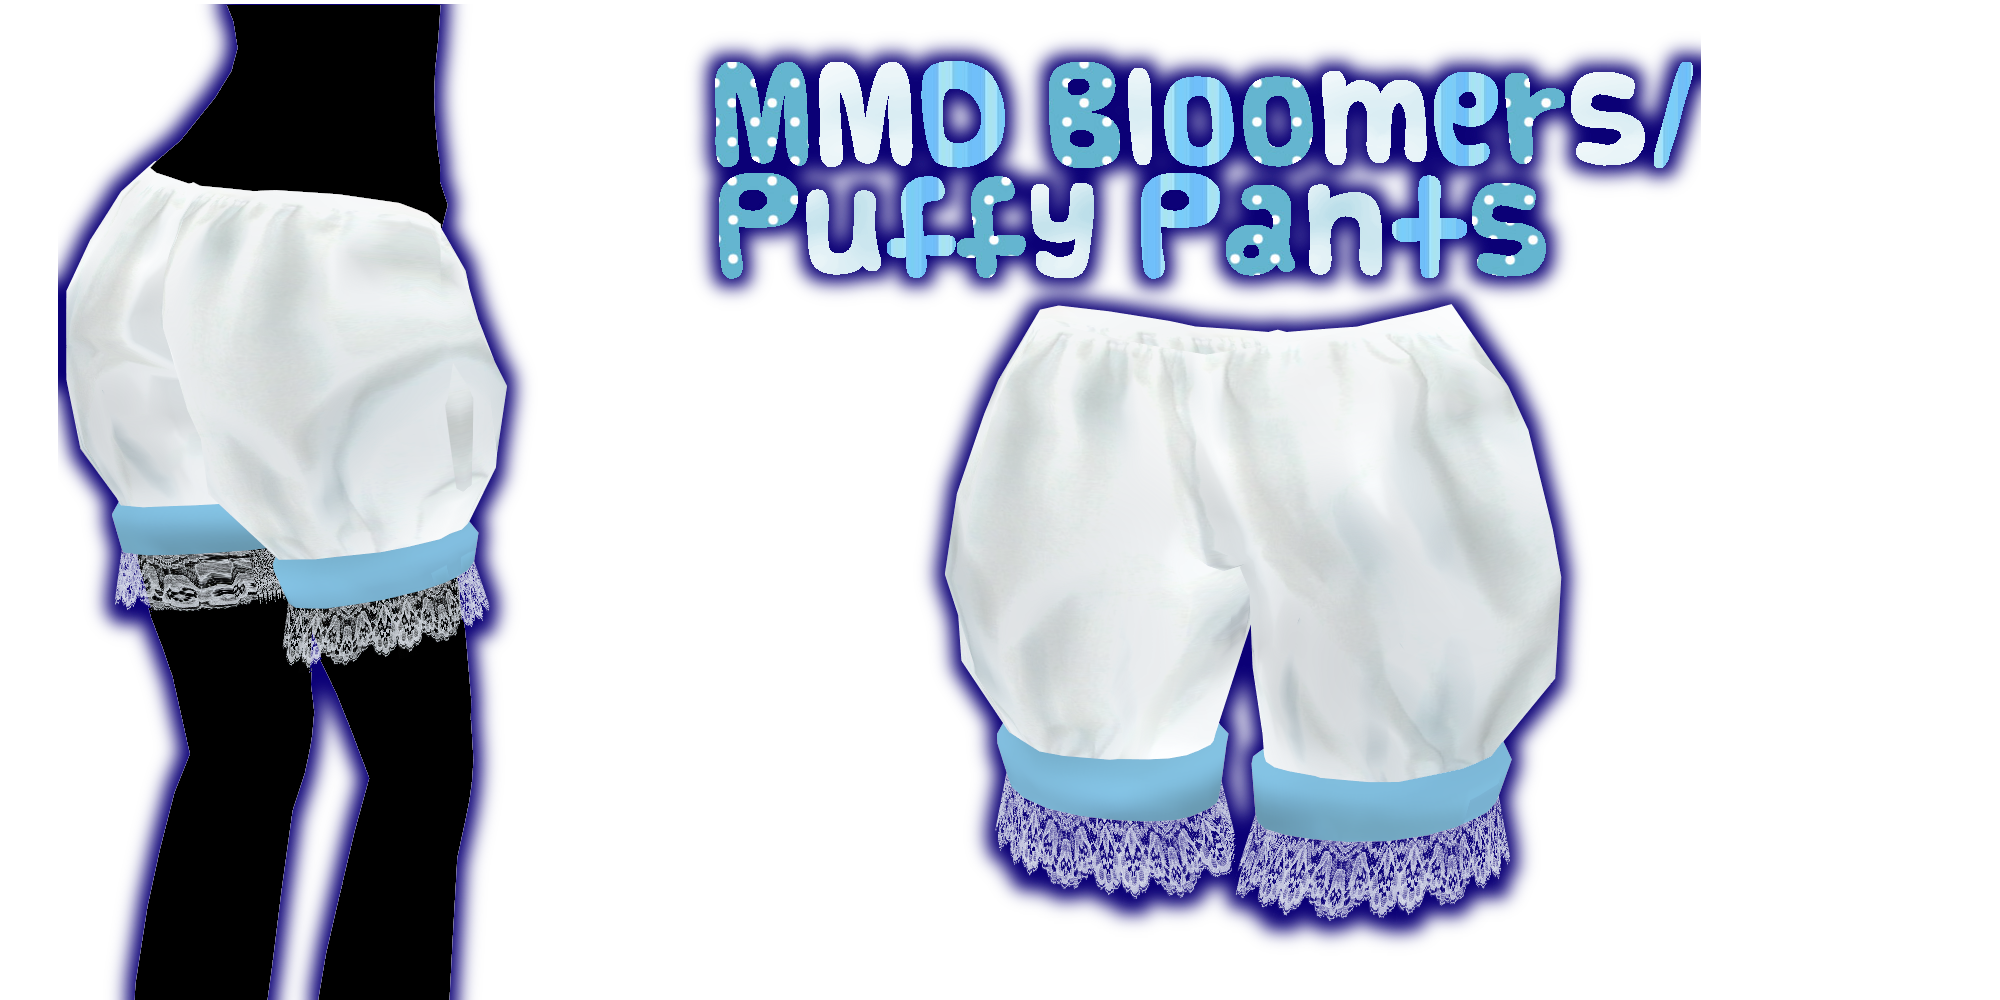 MMD Bloomers/ Fluffy Pants by Tehrainbowllama on DeviantArt